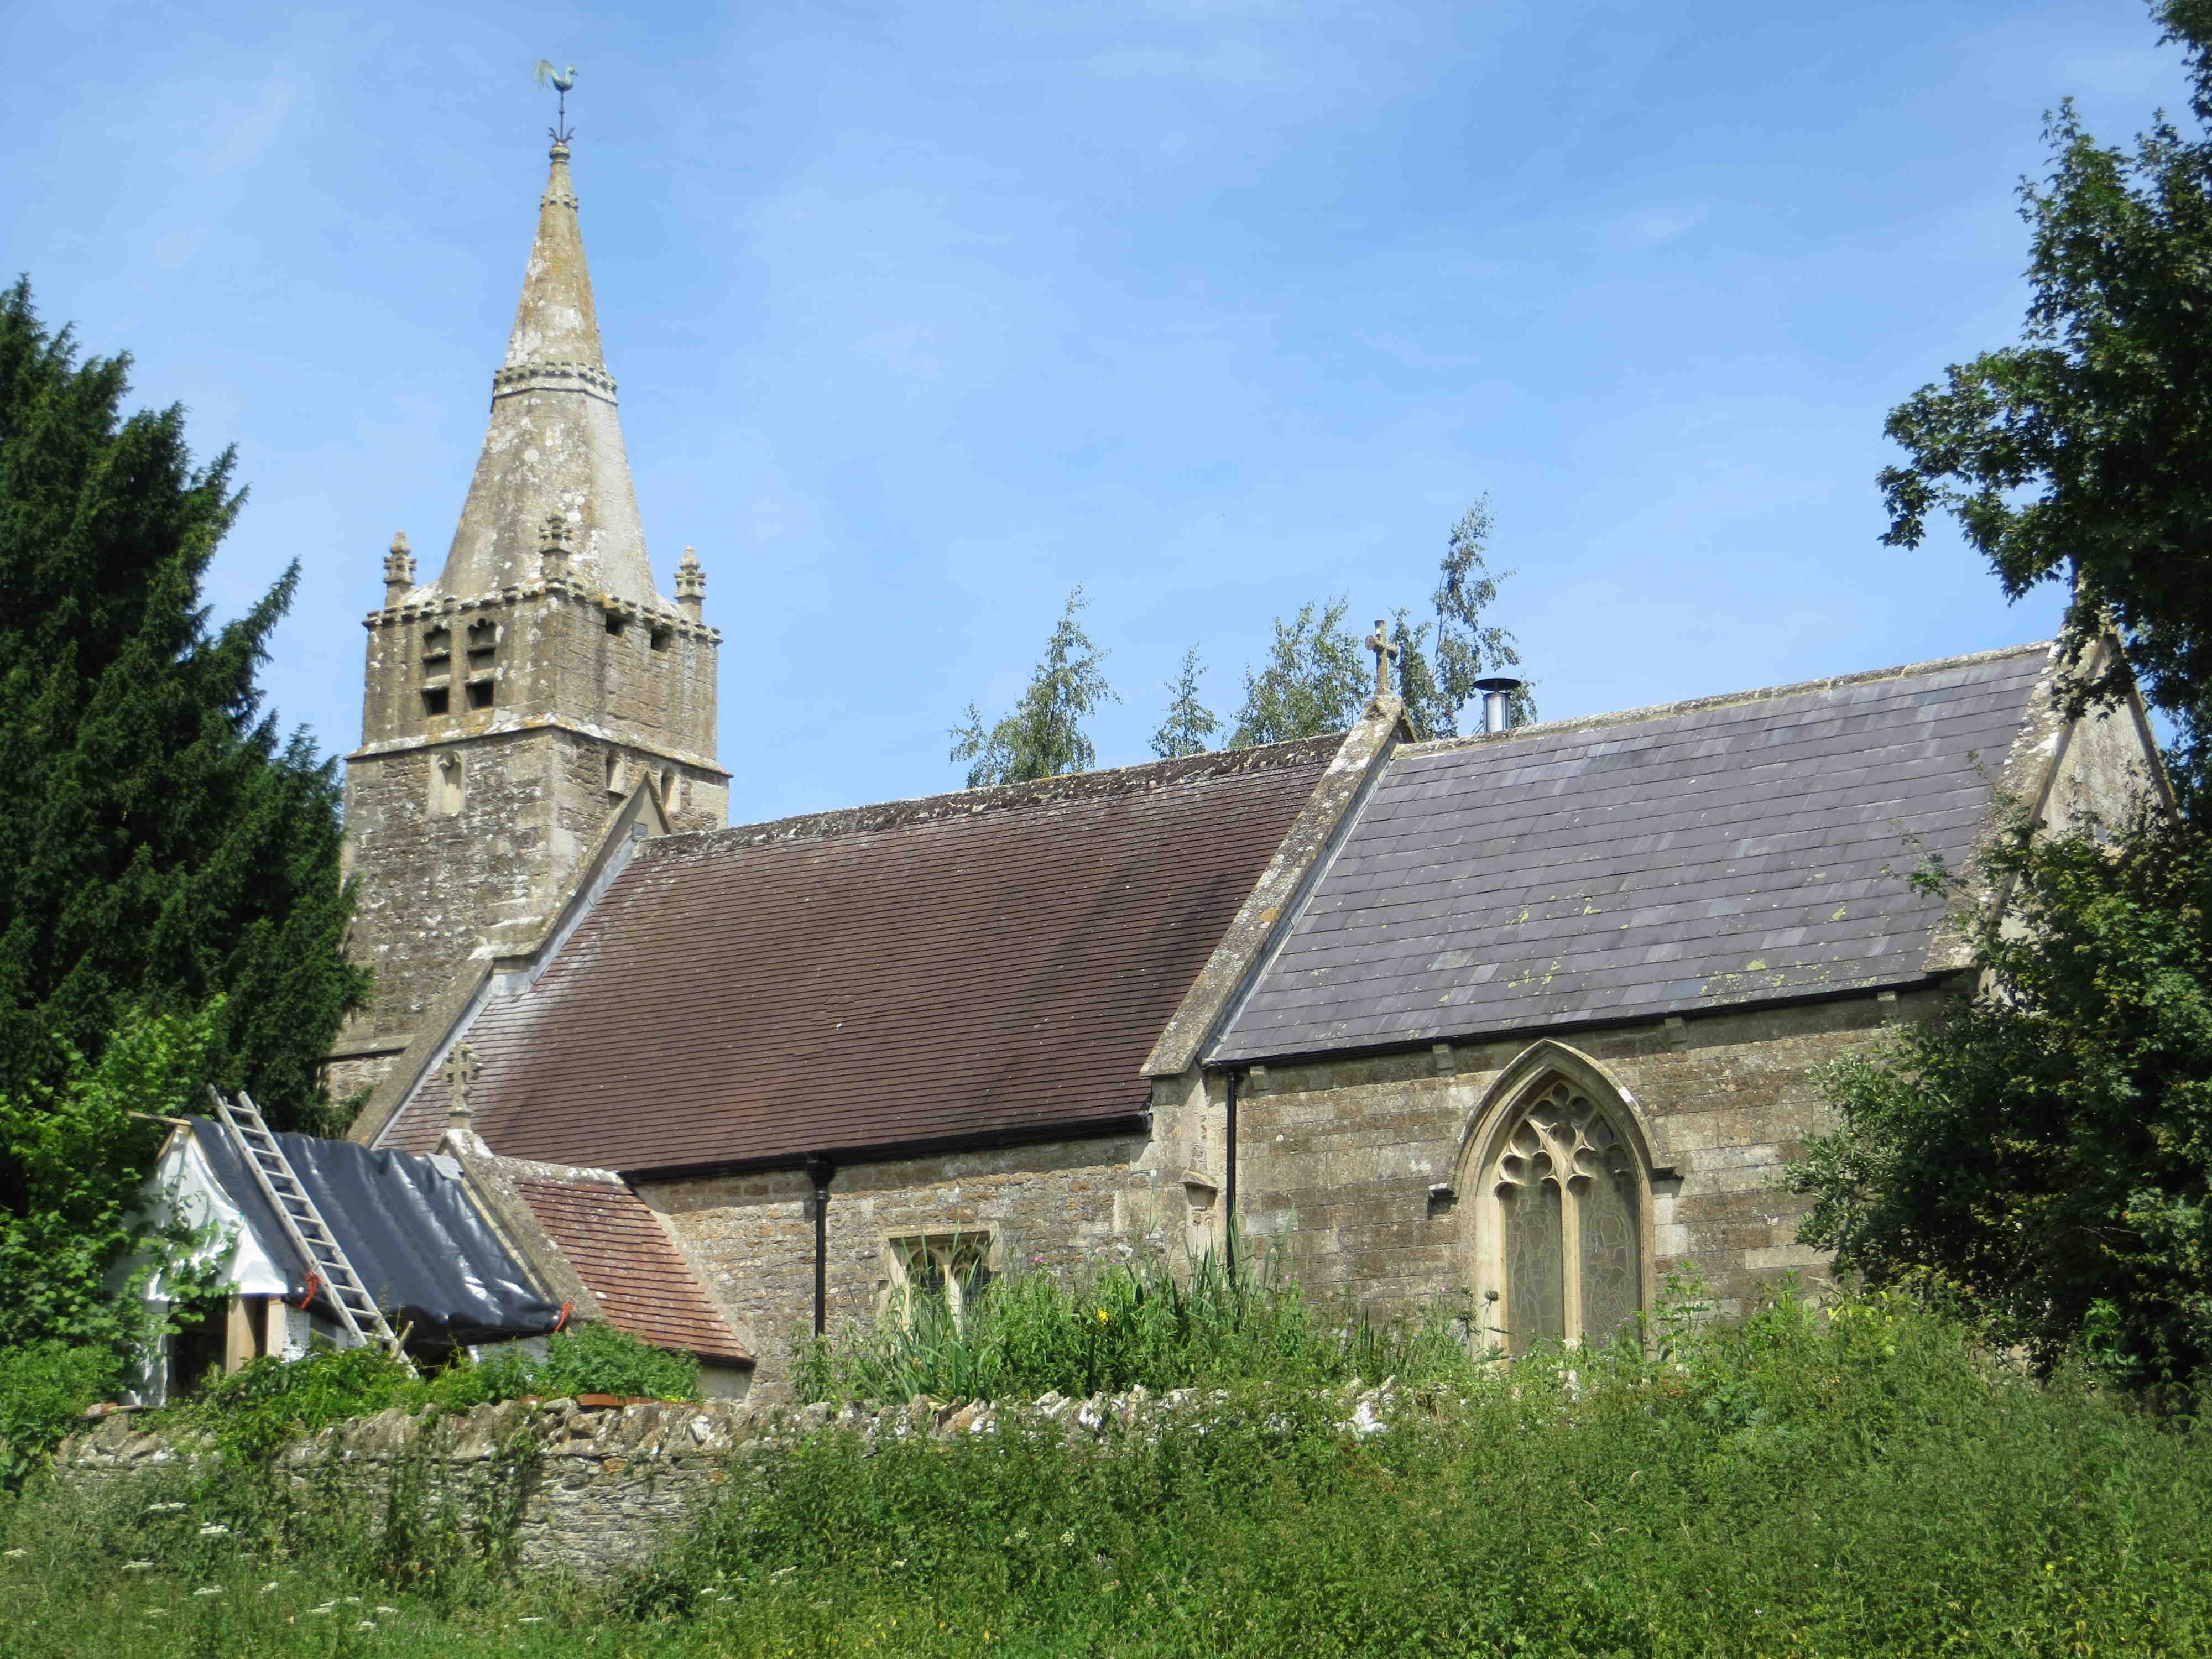 Woolverton church